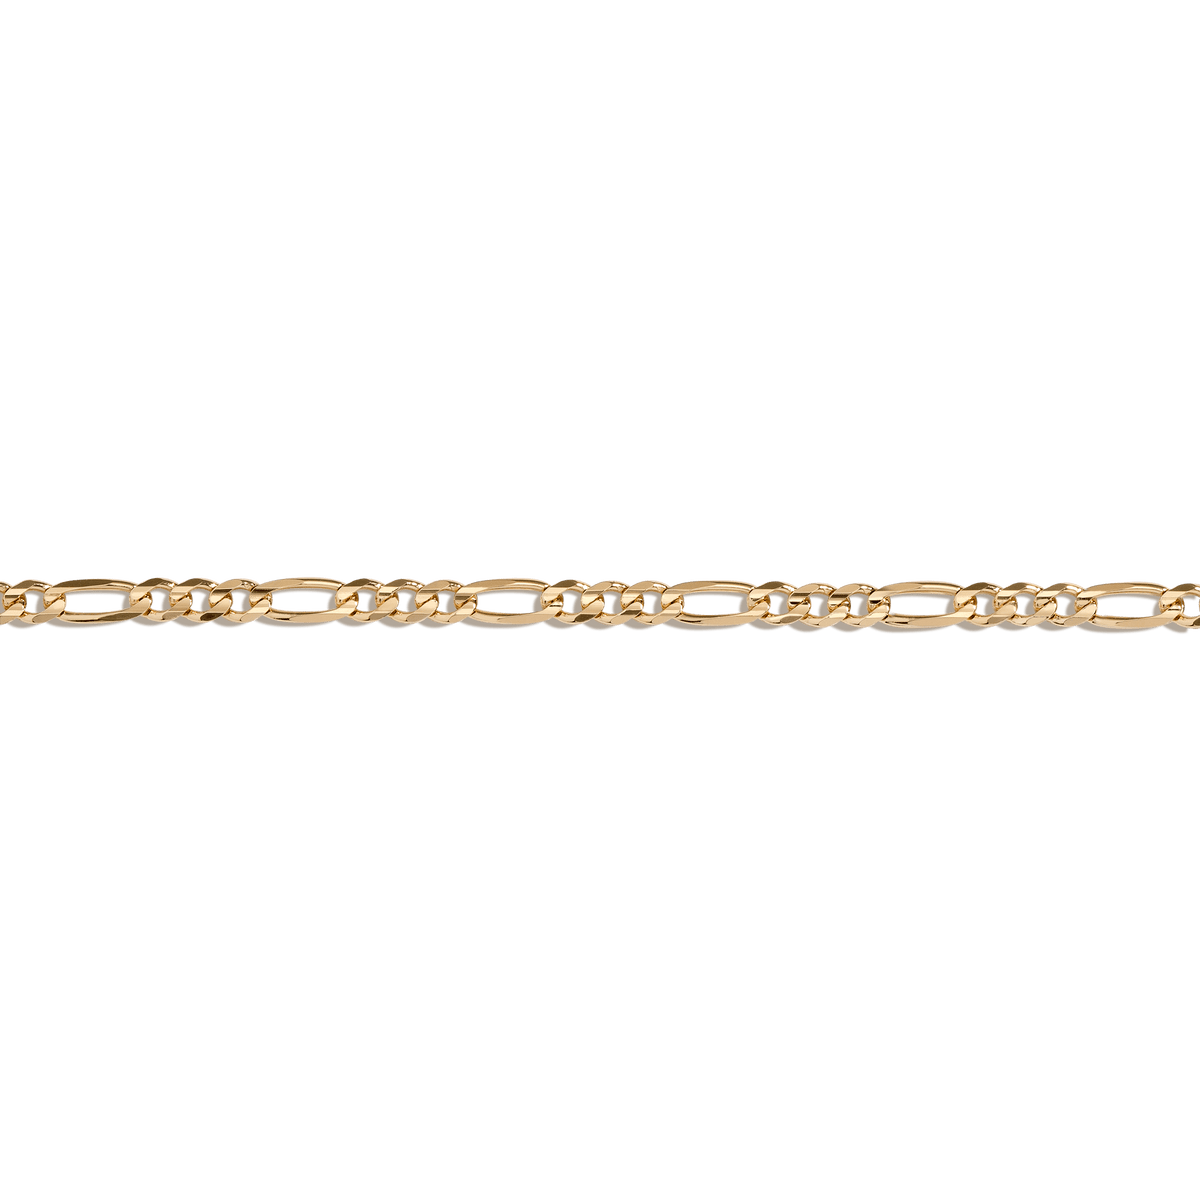 Steel bracelet - U-links in gold and silver coloured hue, 6 mm